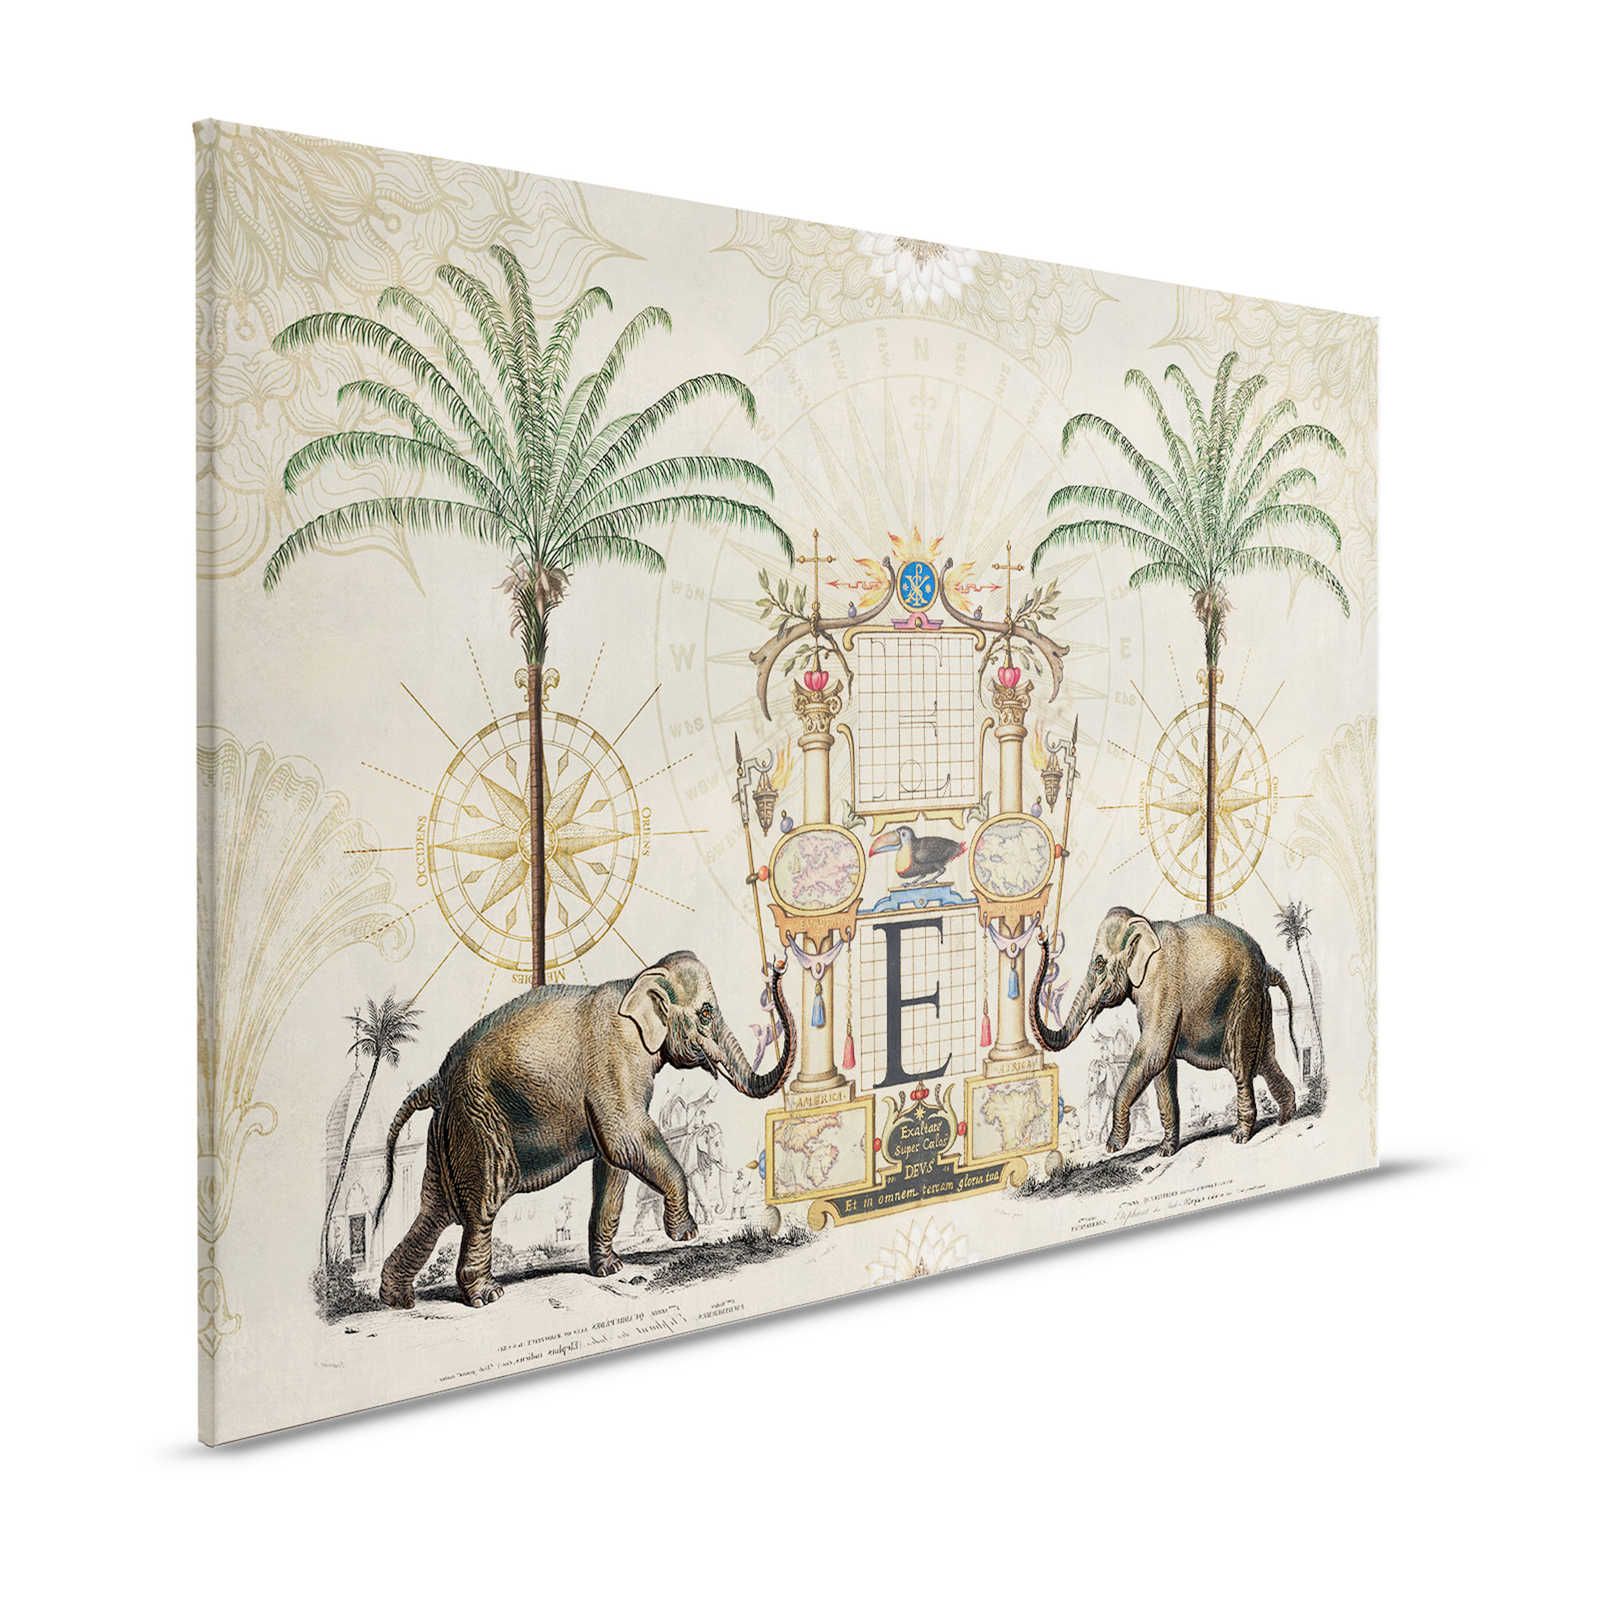 Pittura su tela Nostalgia con motivo di elefante vintage - 1,20 m x 0,80 m
